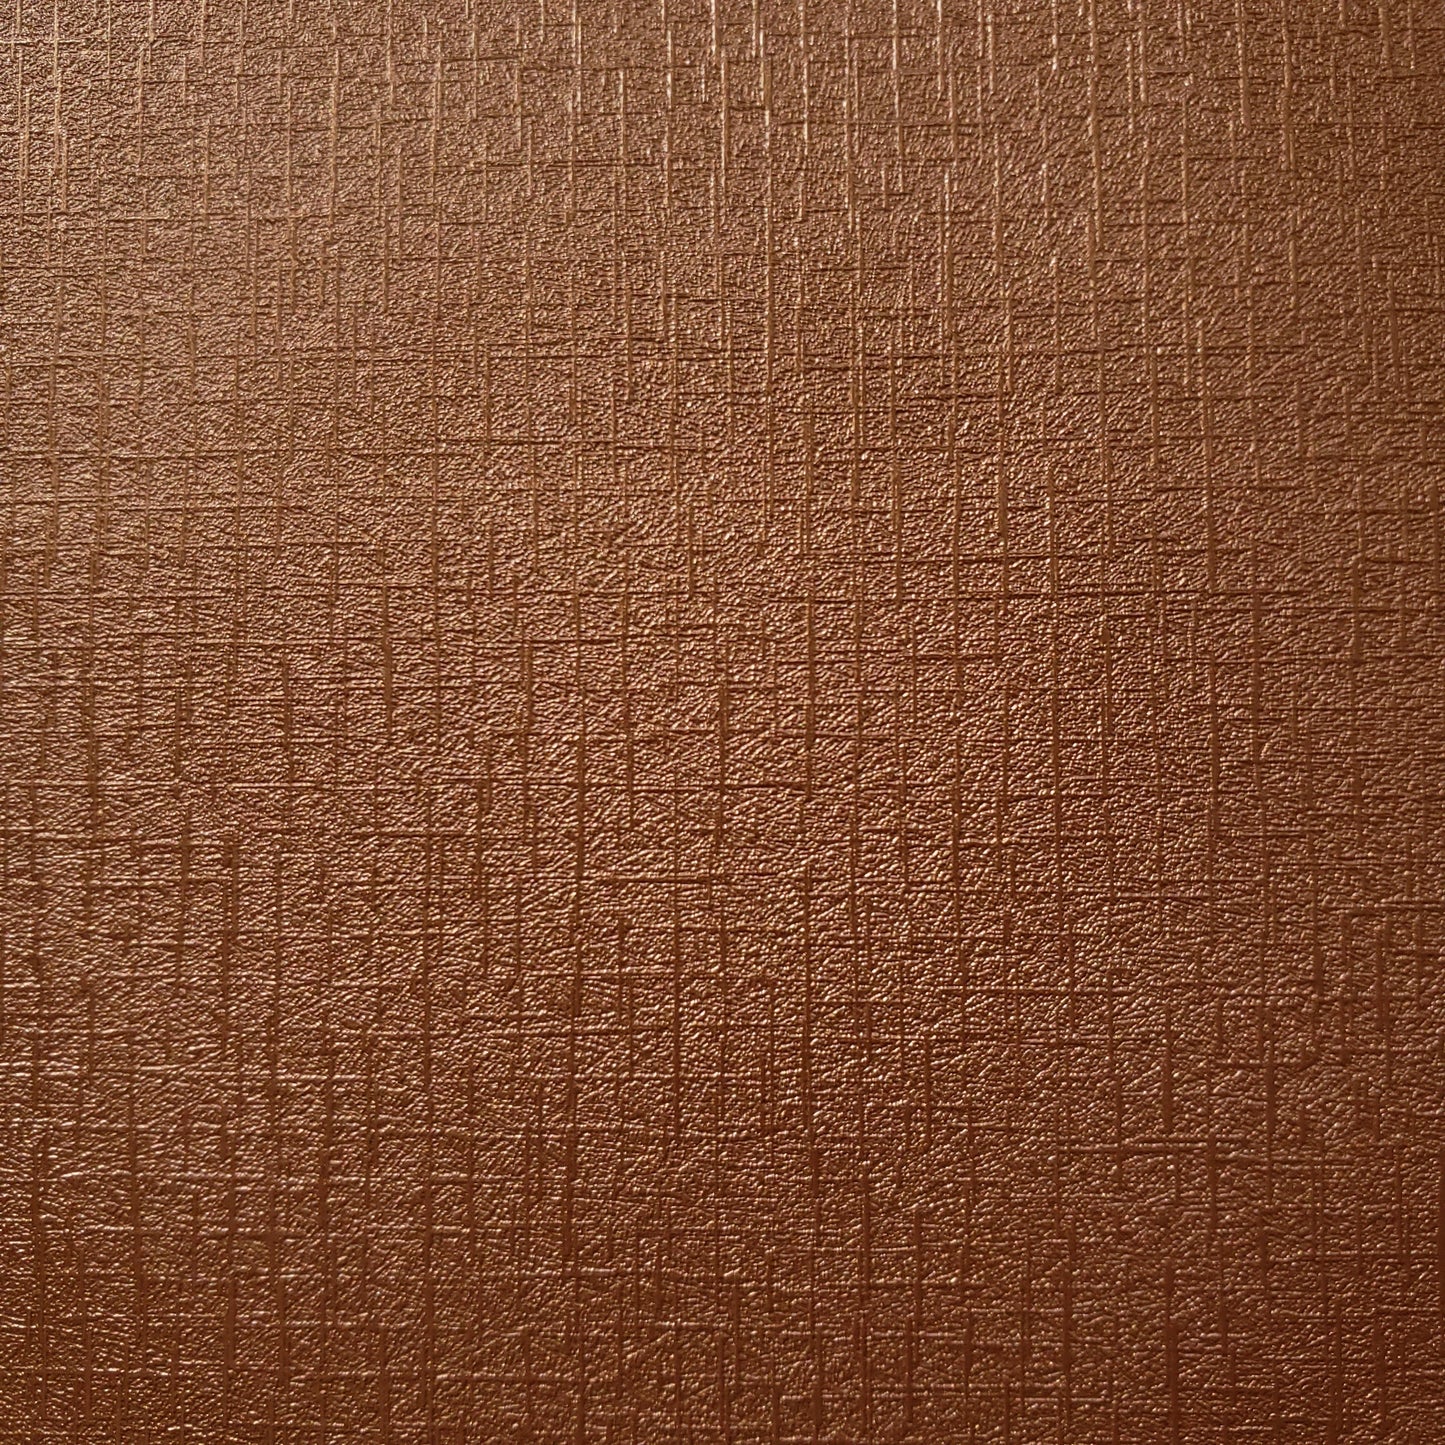 Etched Copper Textured Vinyl